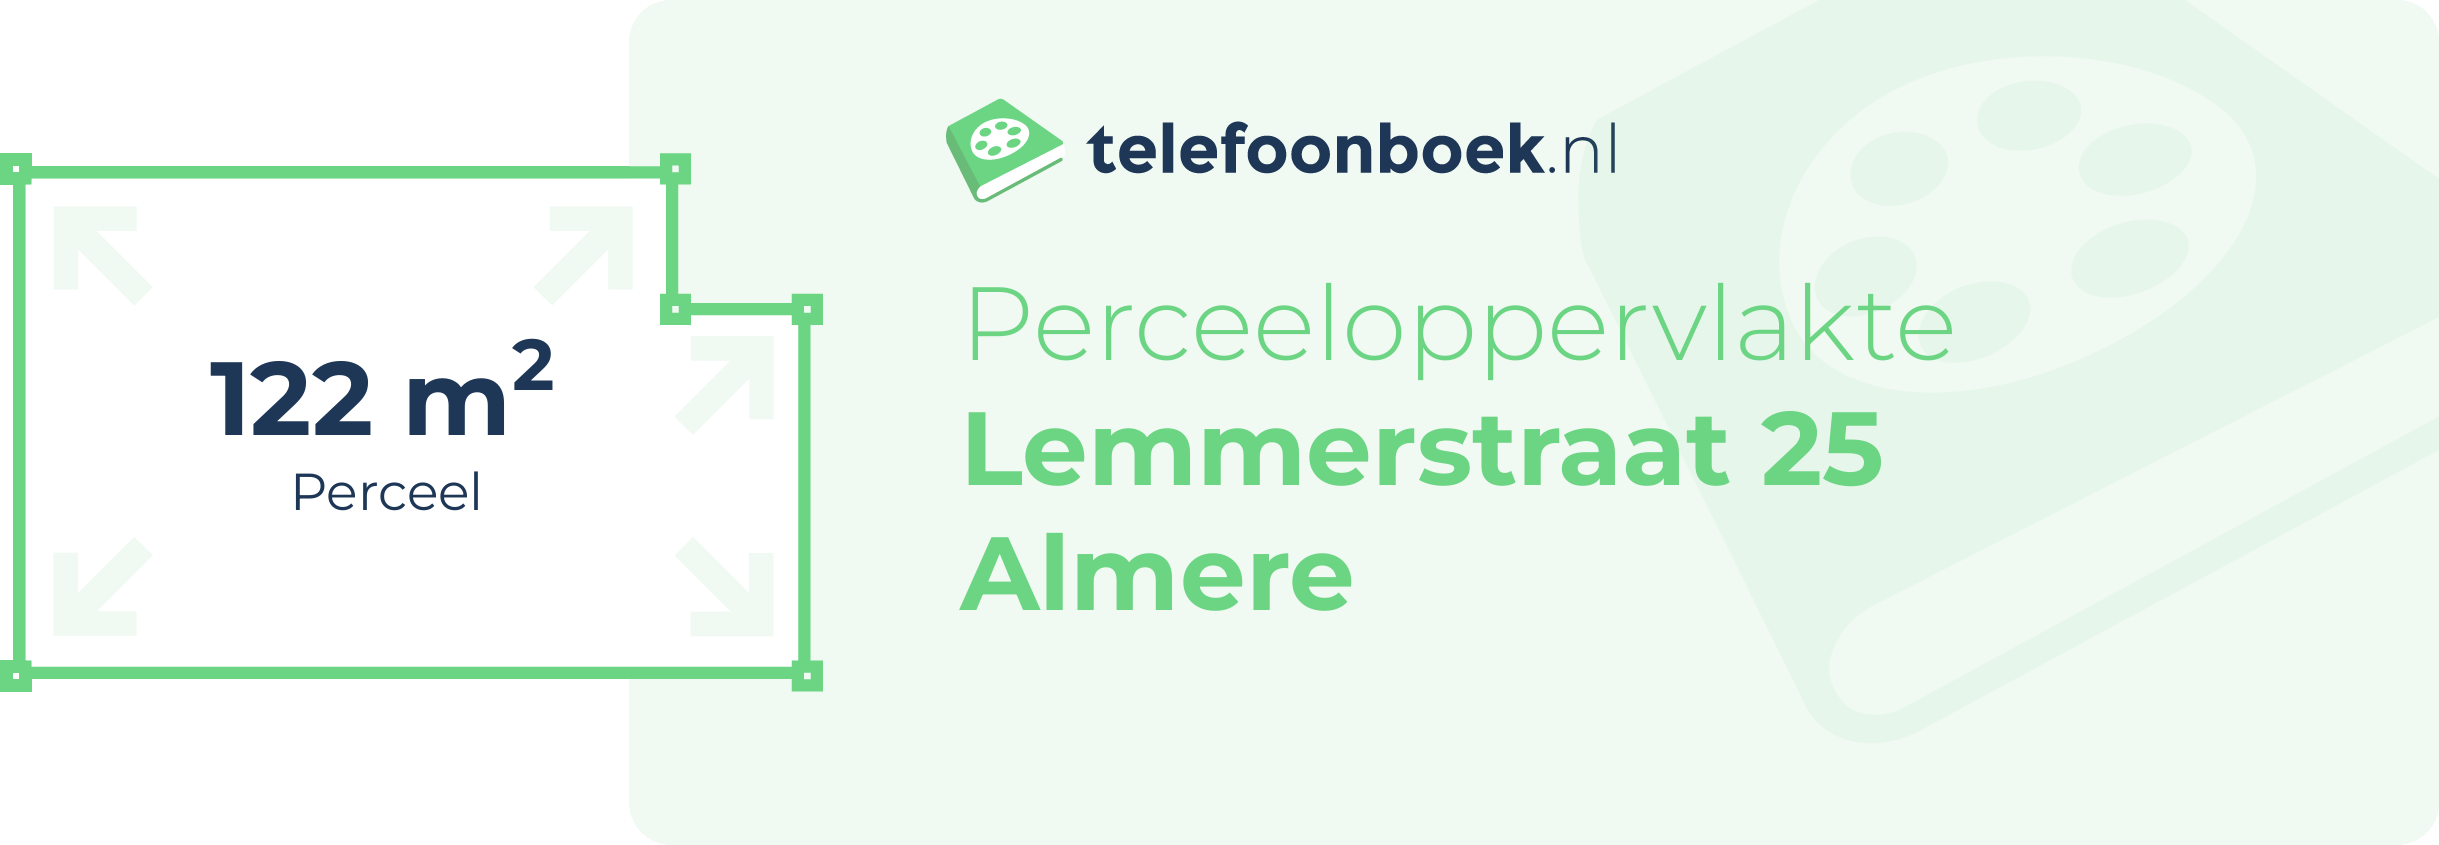 Perceeloppervlakte Lemmerstraat 25 Almere